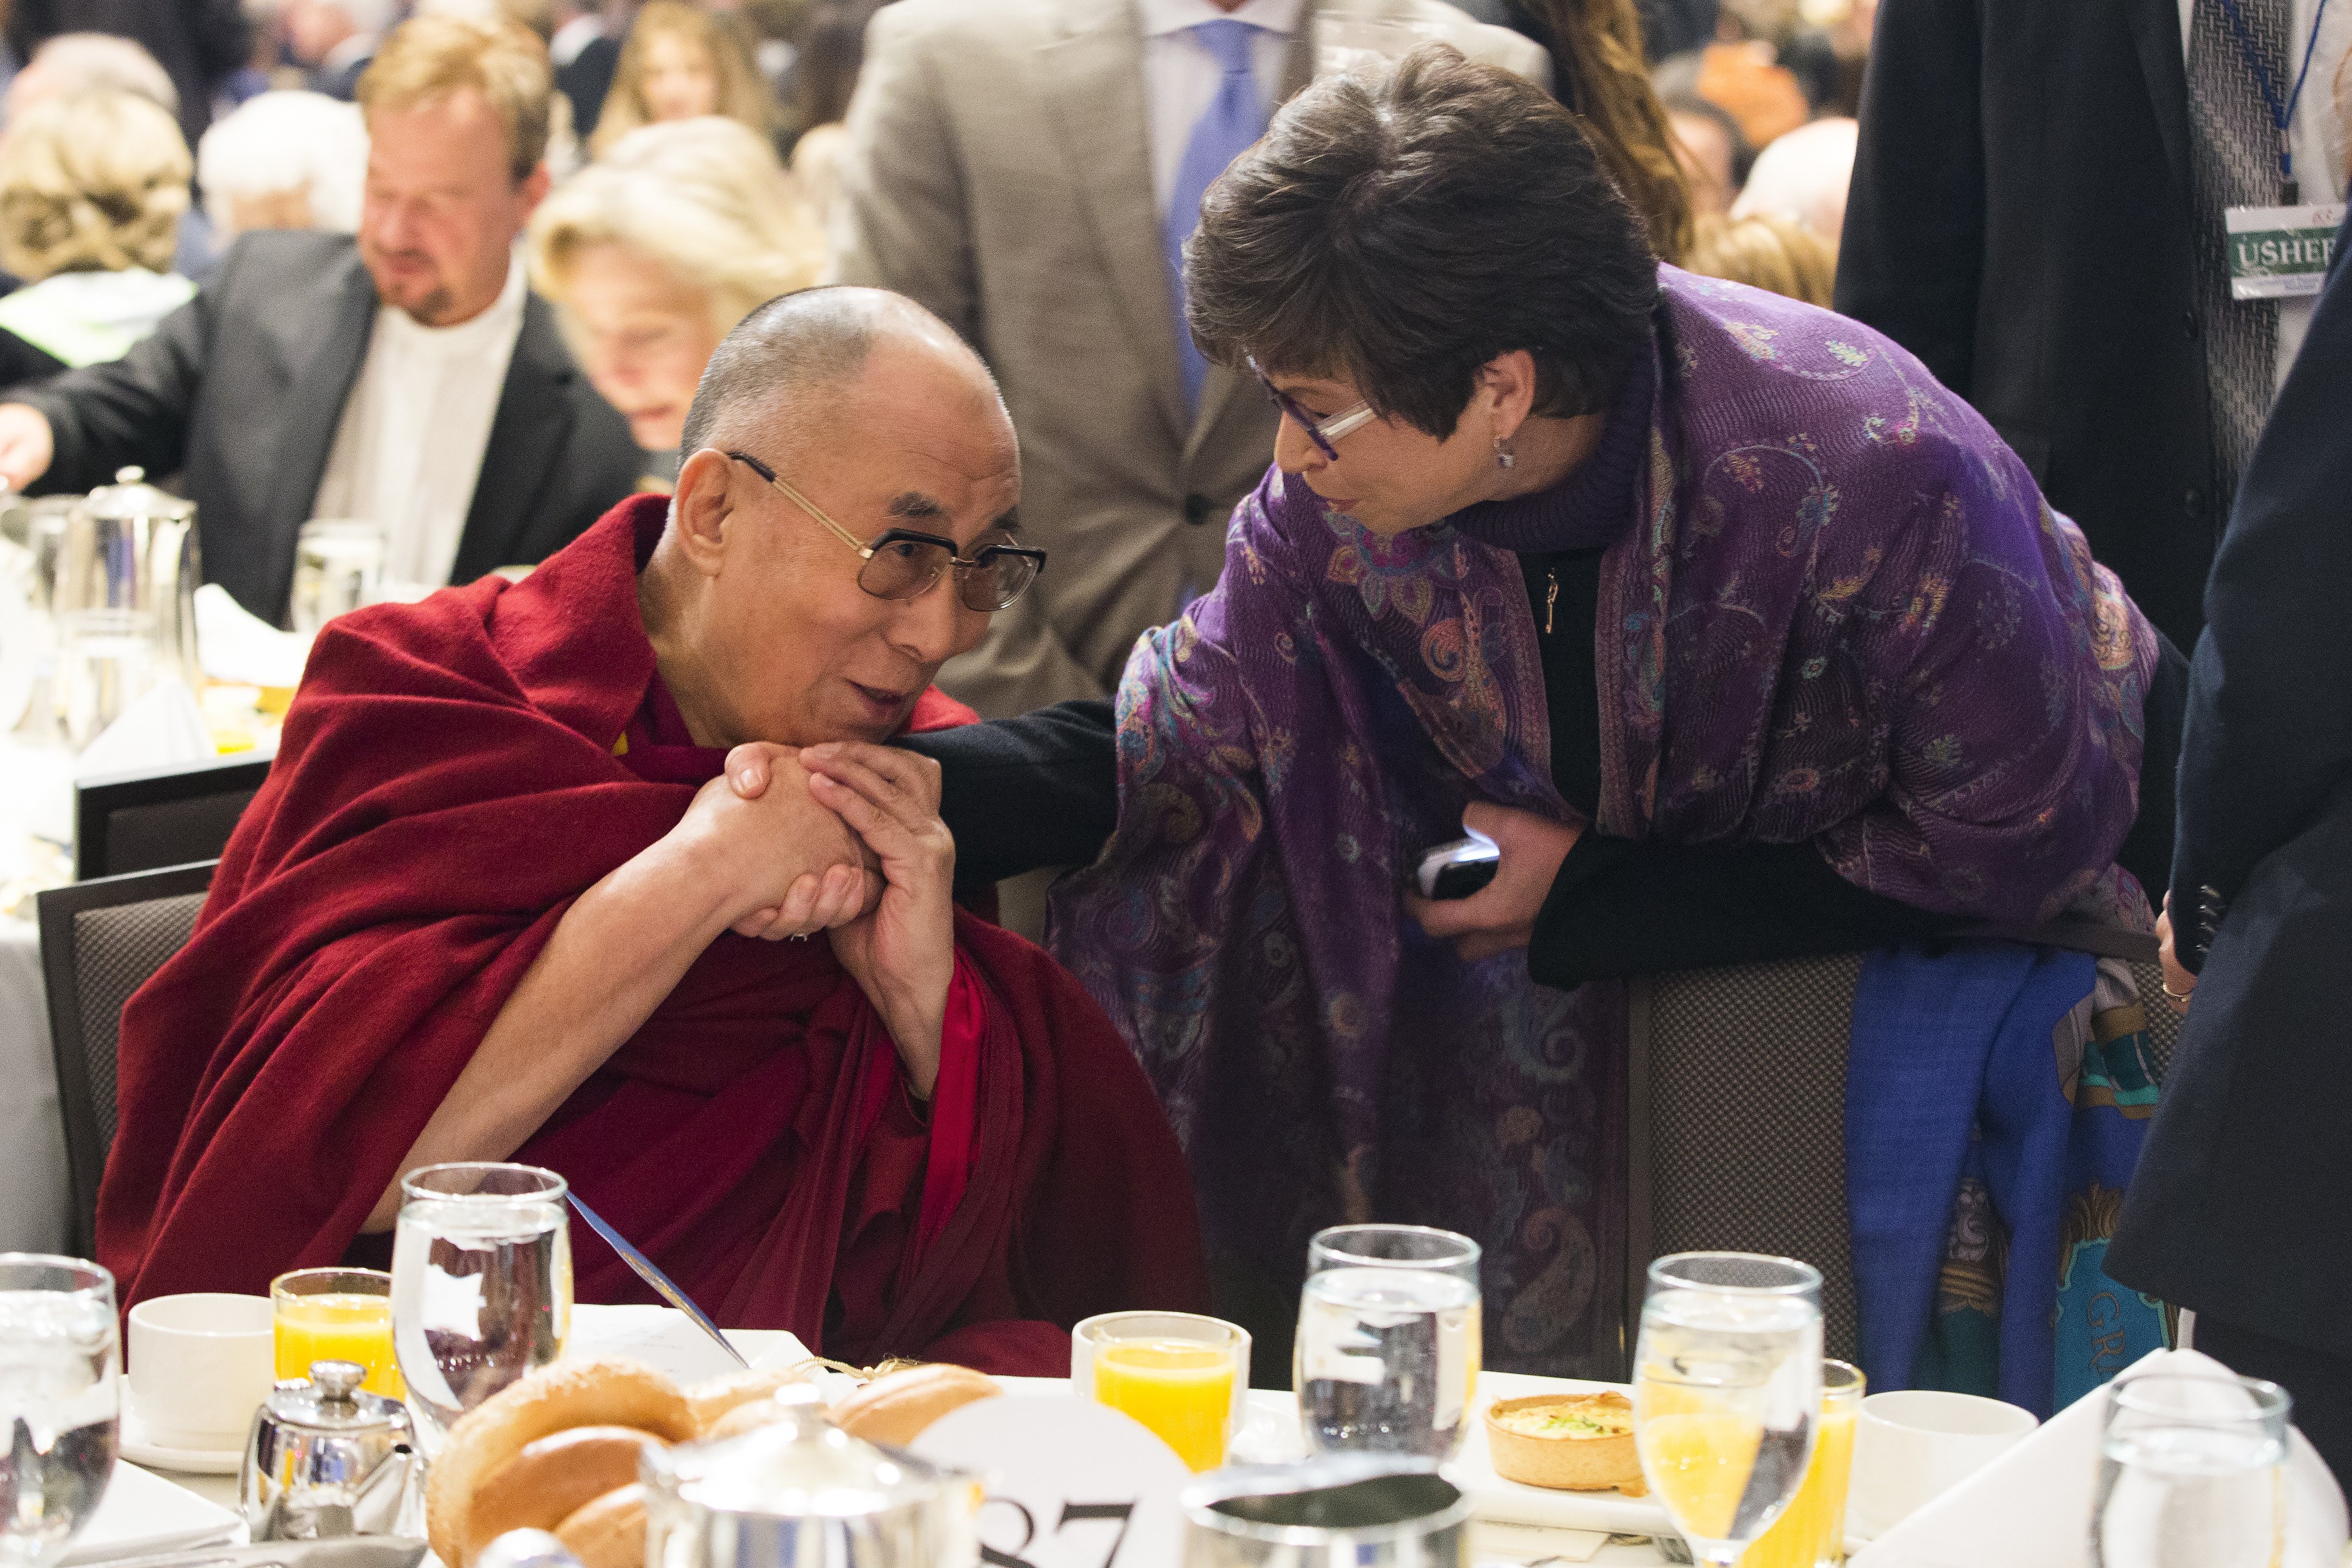 Valerie Jarrett, senior adviser to President Barack Obama, talks with the Dalai Lama during the National Prayer Breakfast in Washington D.C., on Feb. 5, 2015 (Evan Vucci—AP)